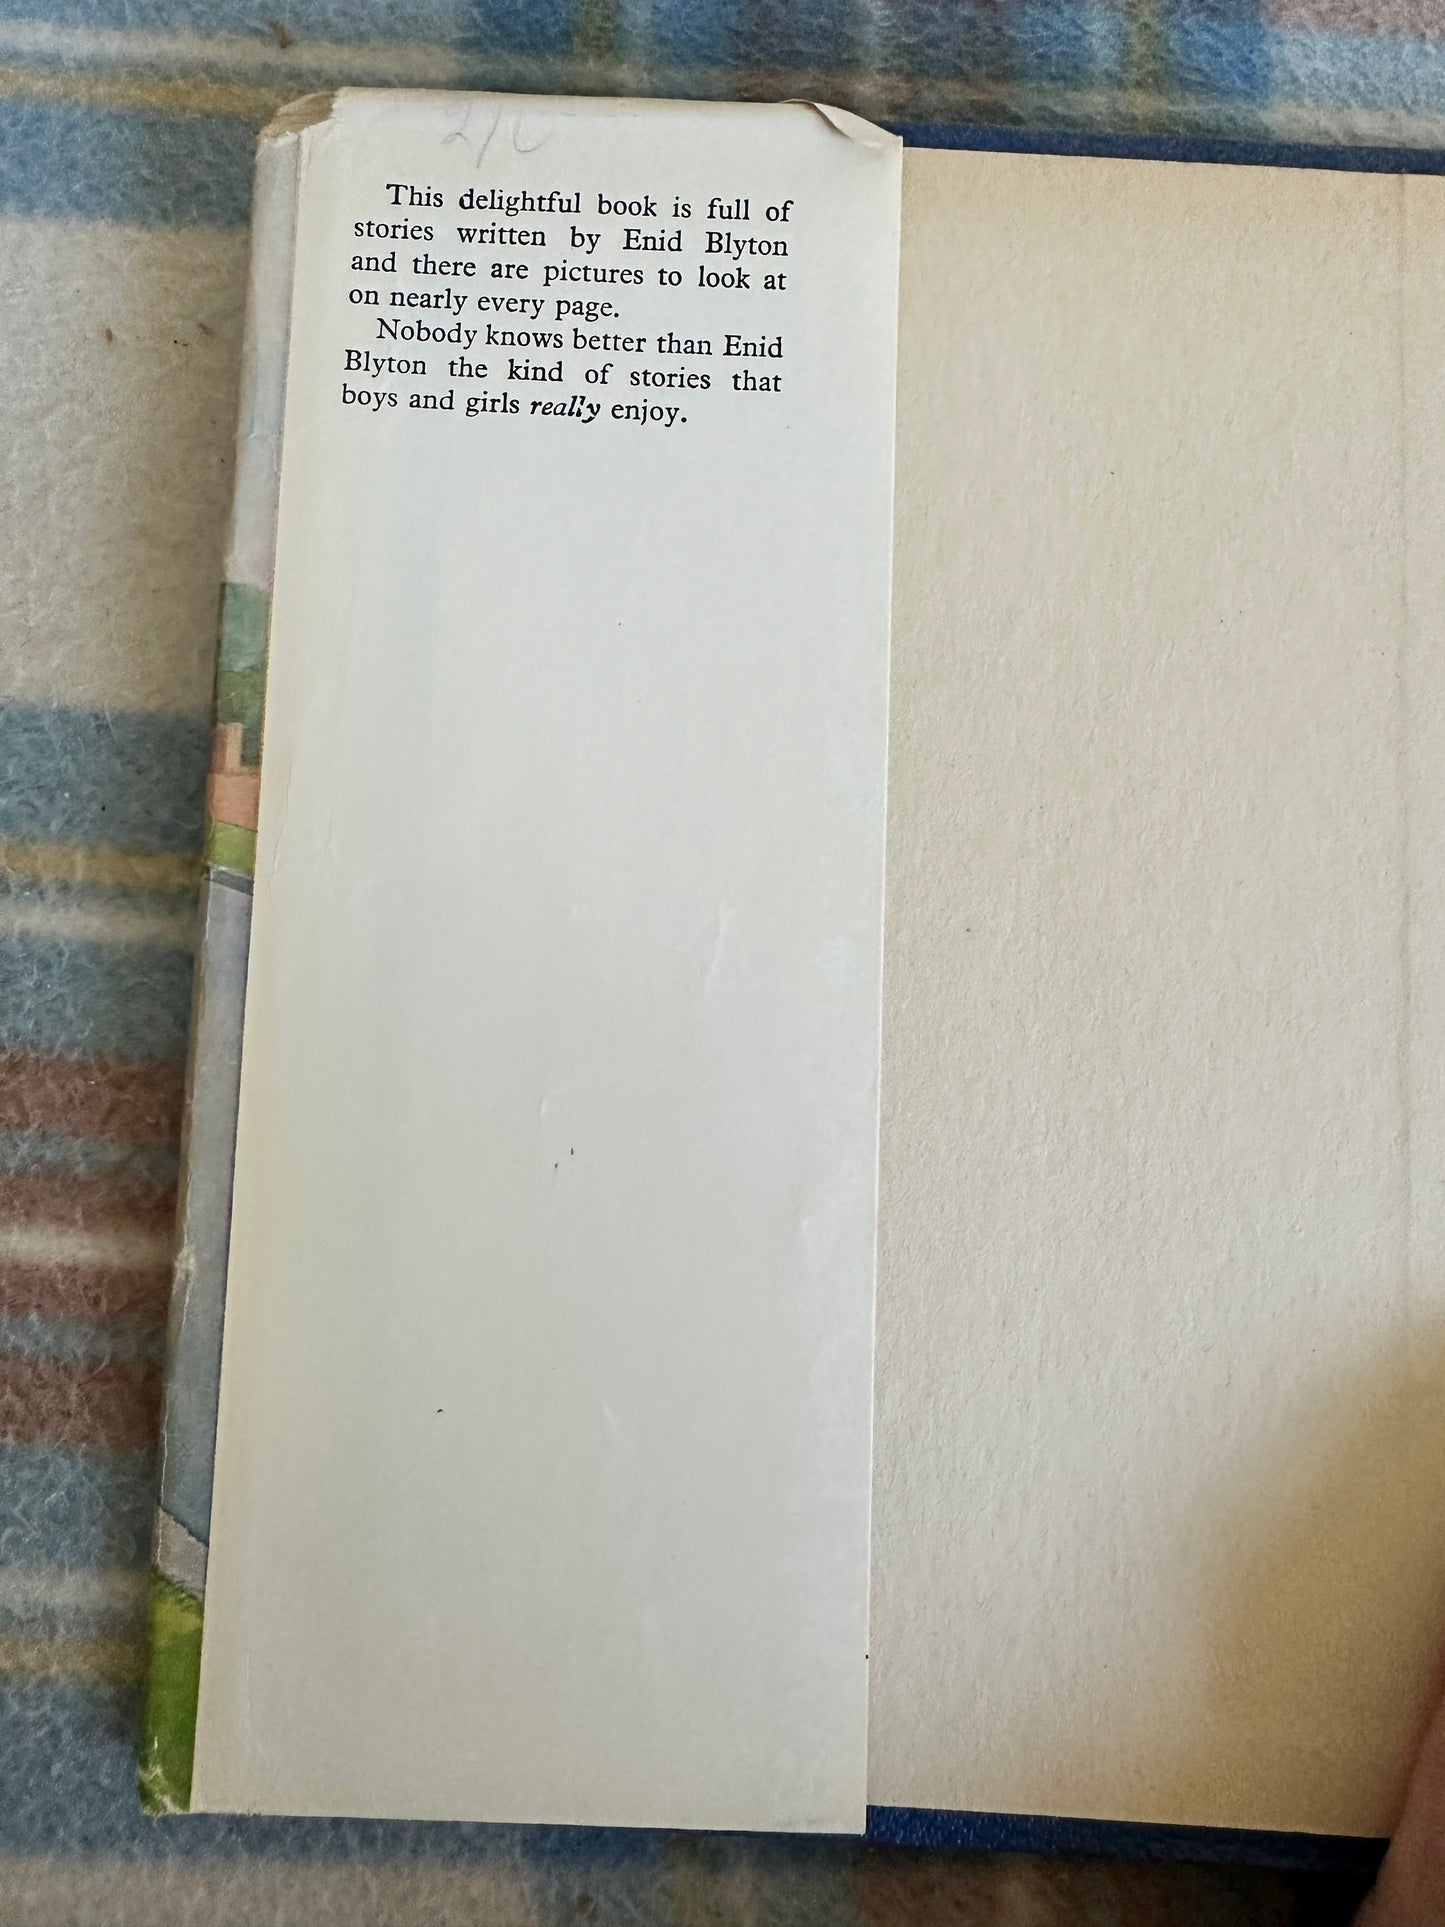 1964 Storytime Book - Enid Blyton(Dean & Son Ltd)